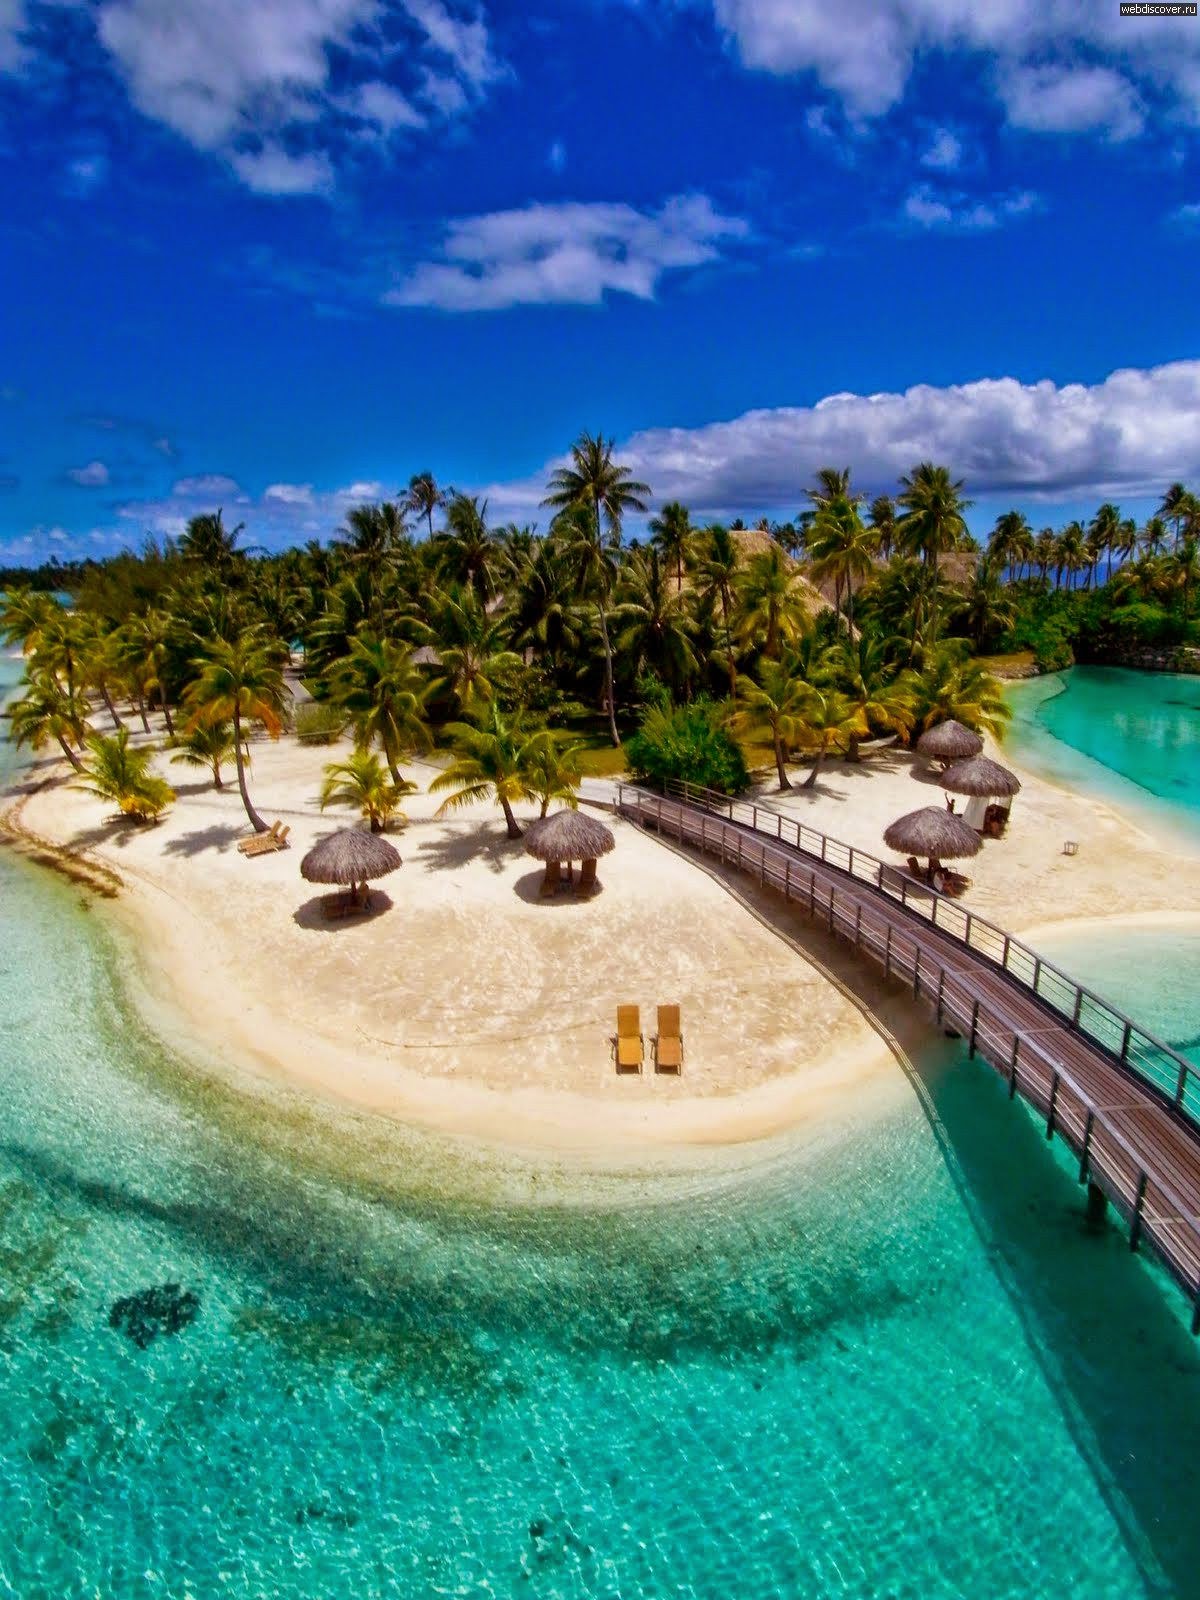 BAHAMAS, ATLANTIC OCEAN 10 Most Beautiful Island Countries in the World